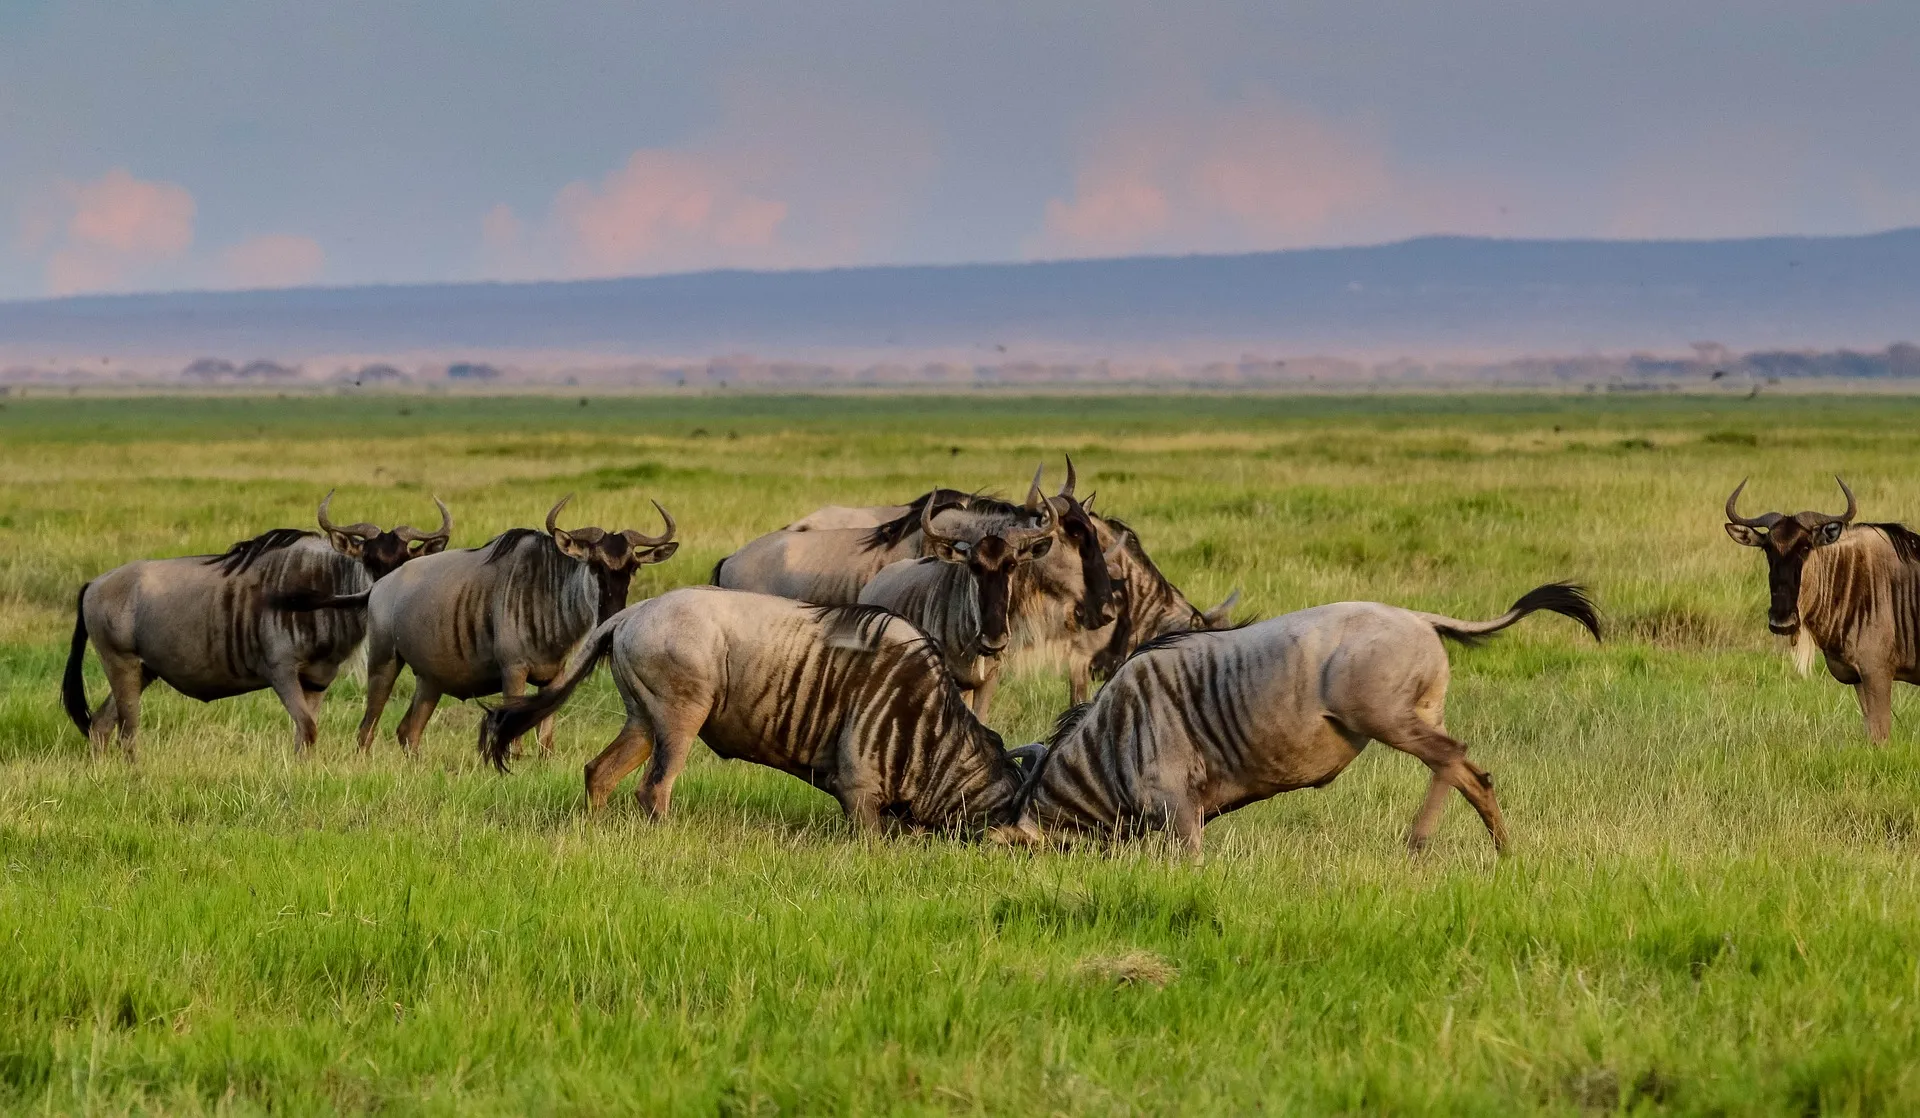 Catching some wildlife action on your 4-day Masai Mara Safari - wildebeest fighting